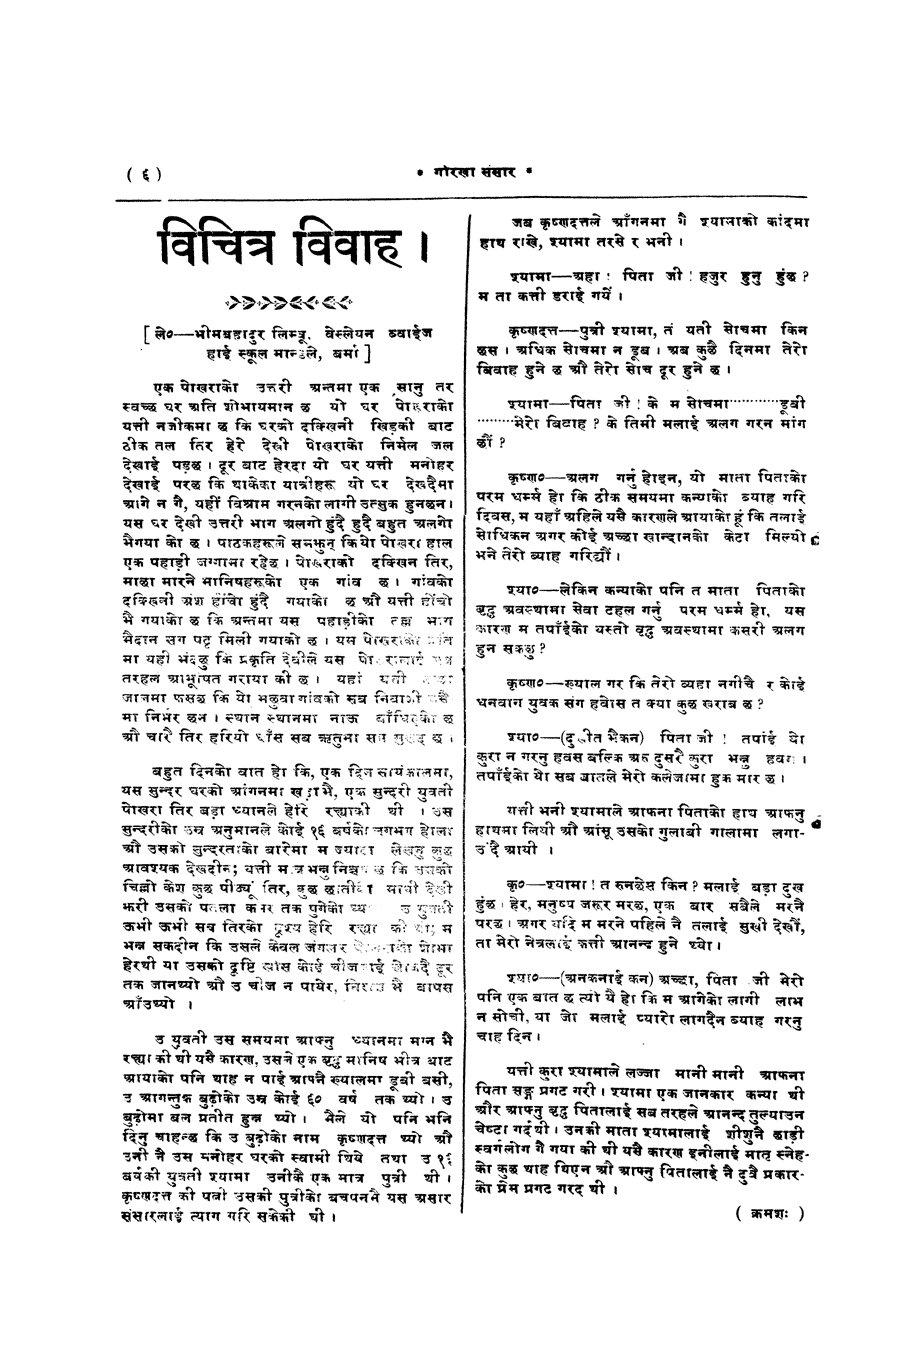 Gorkha Sansar, 23 July 1927, page 6